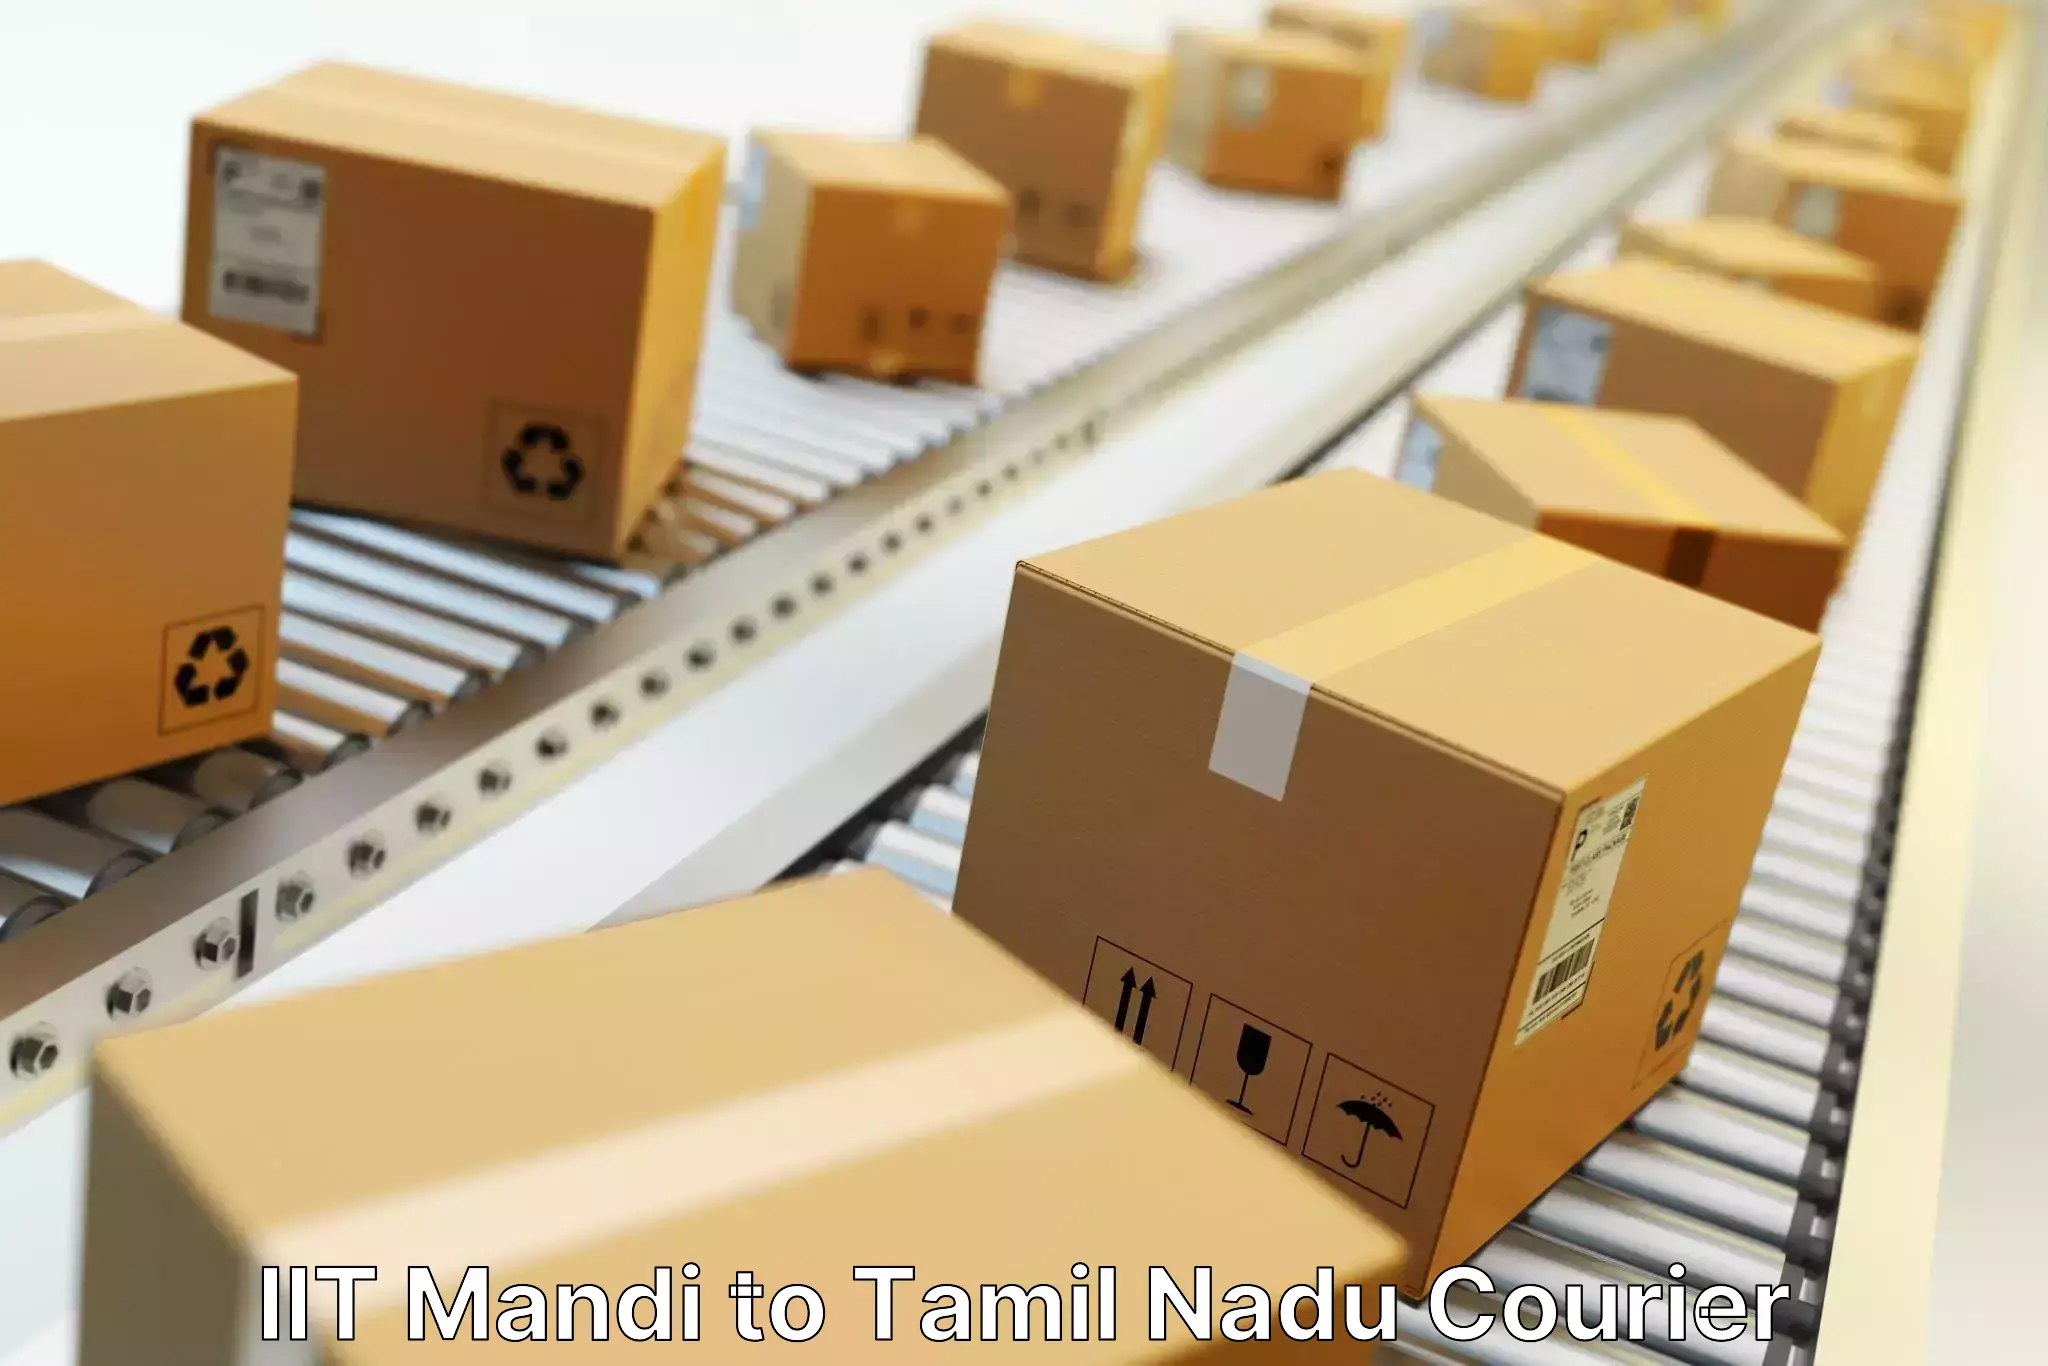 Global logistics network IIT Mandi to Sathyamangalam